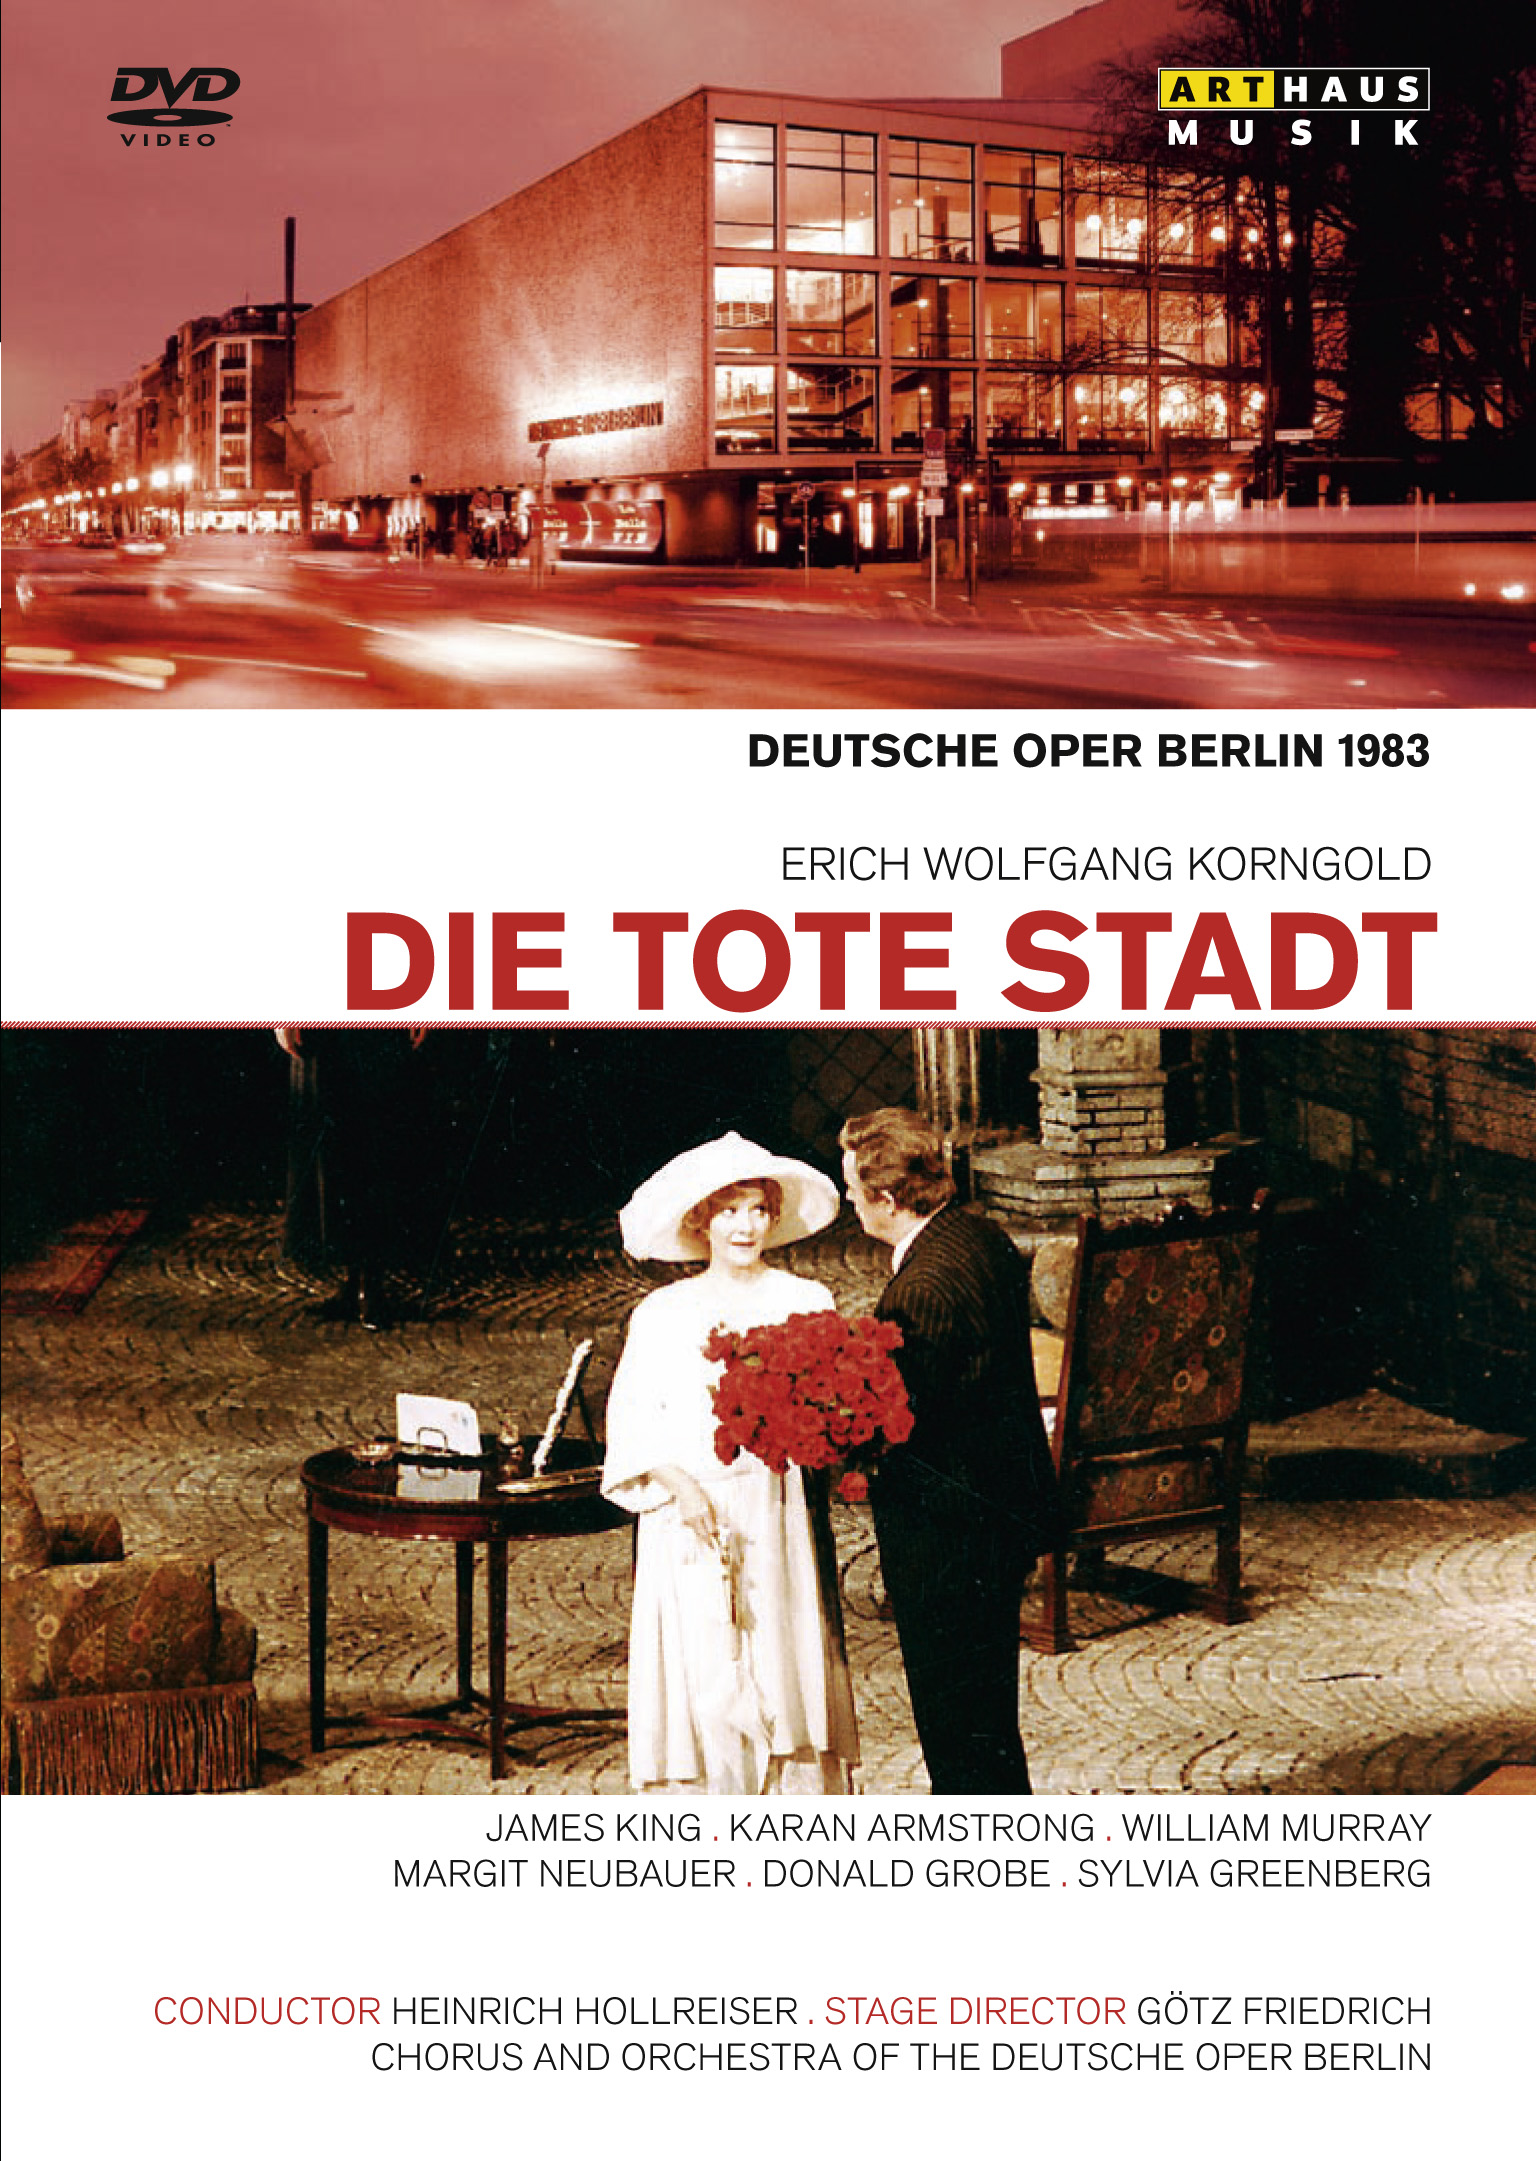 Erich Wolfgang Korngold Die tote Stadt - Opera DVD - Arthaus Musik